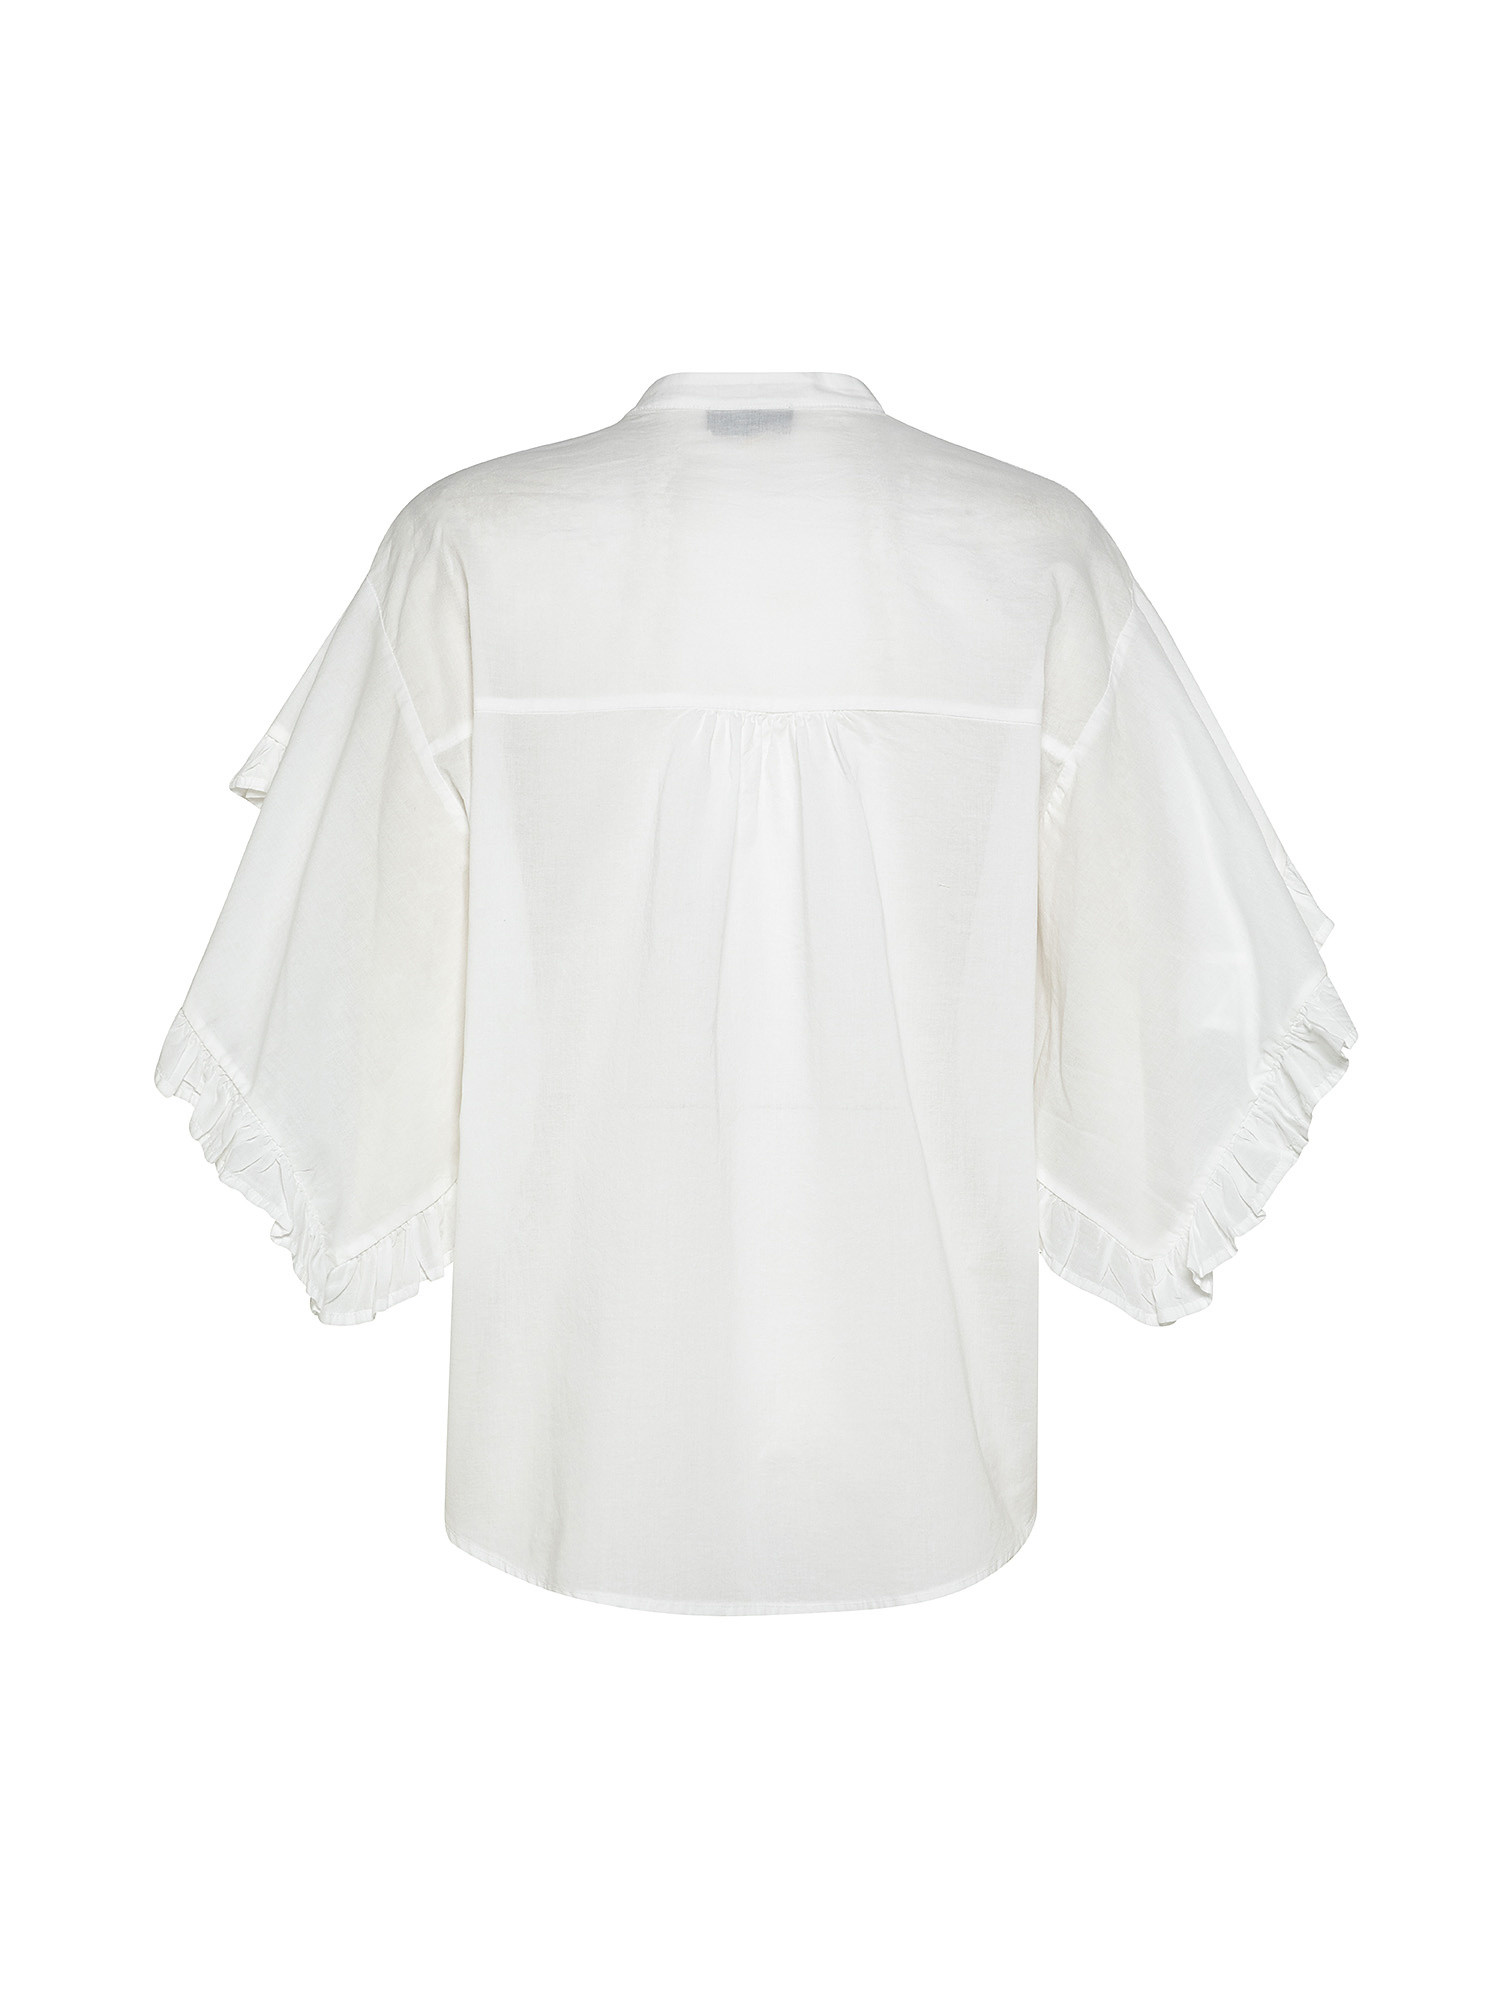 Shirt, White, large image number 1